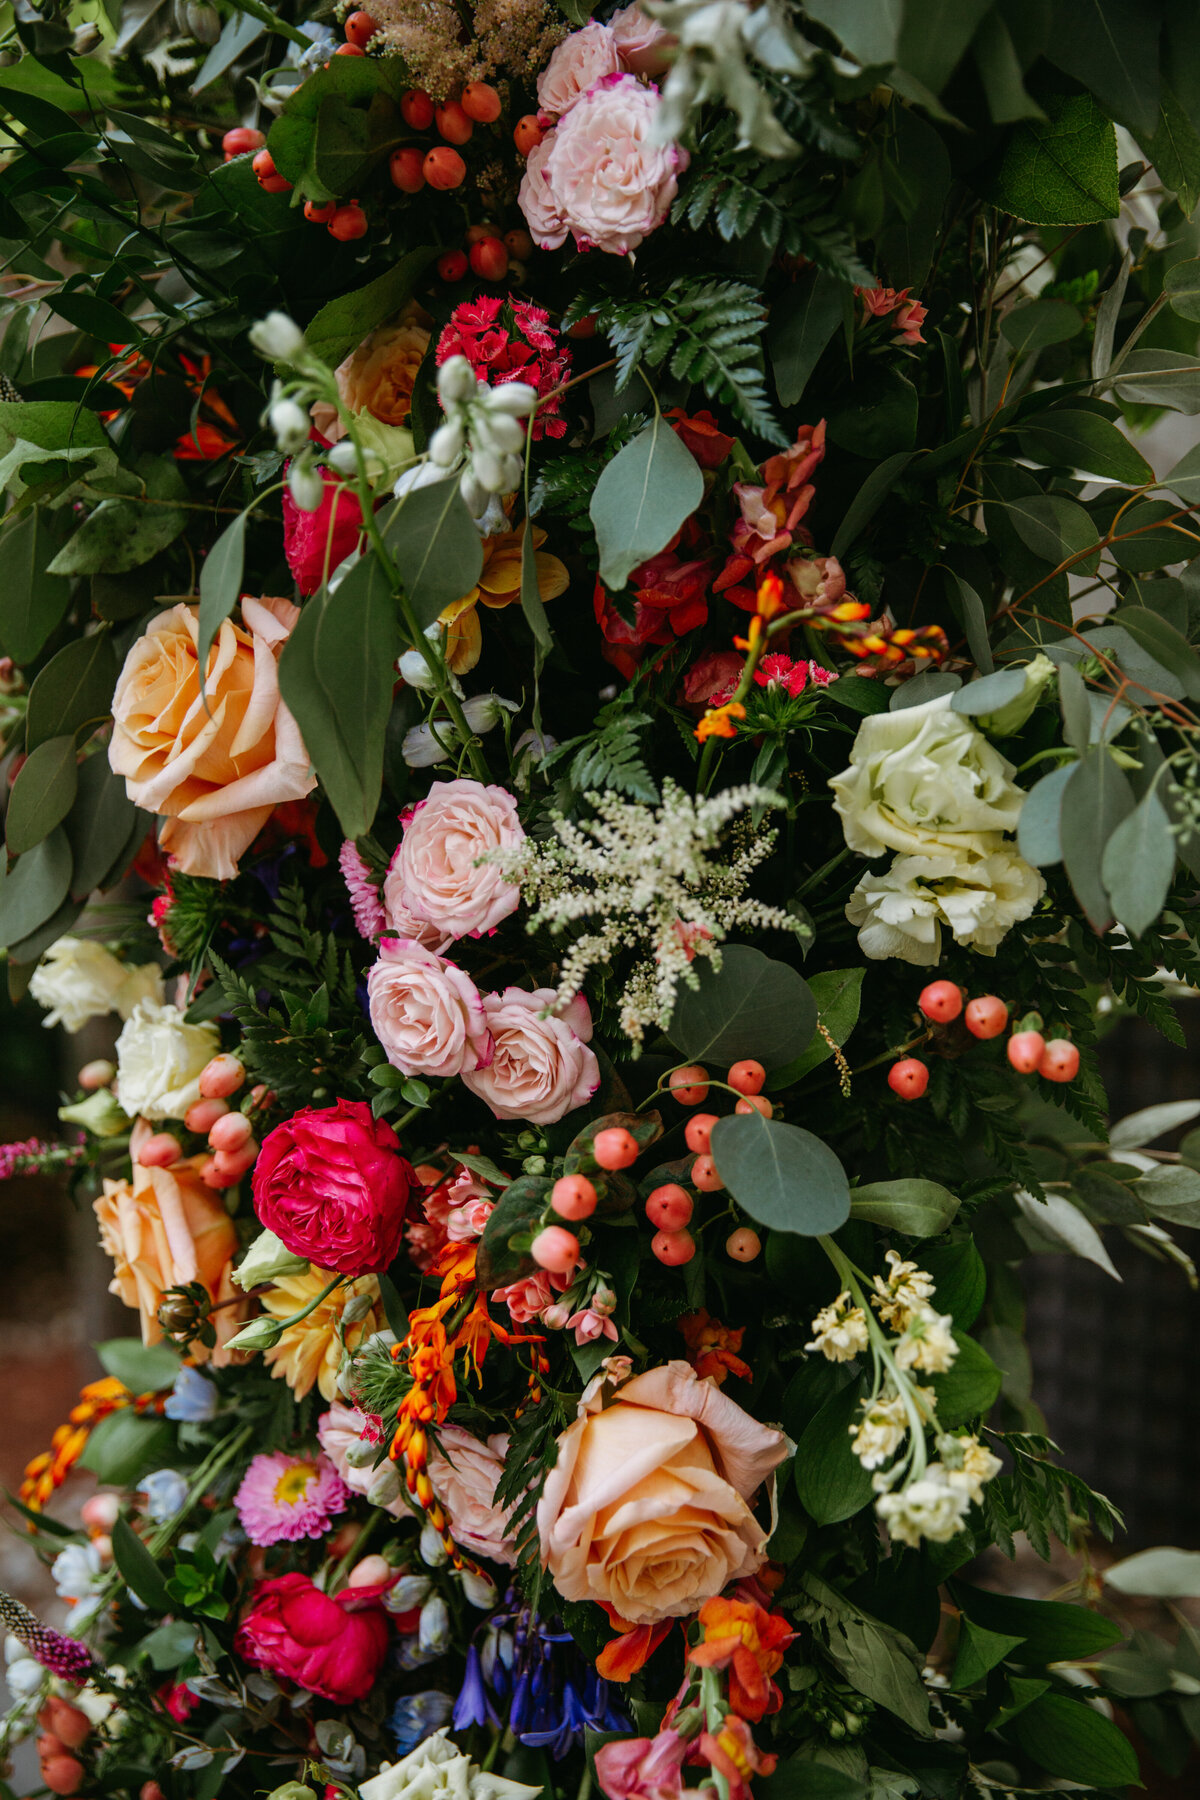 Just Bloom'd Weddings - wedding florist in Sudbury, MA.